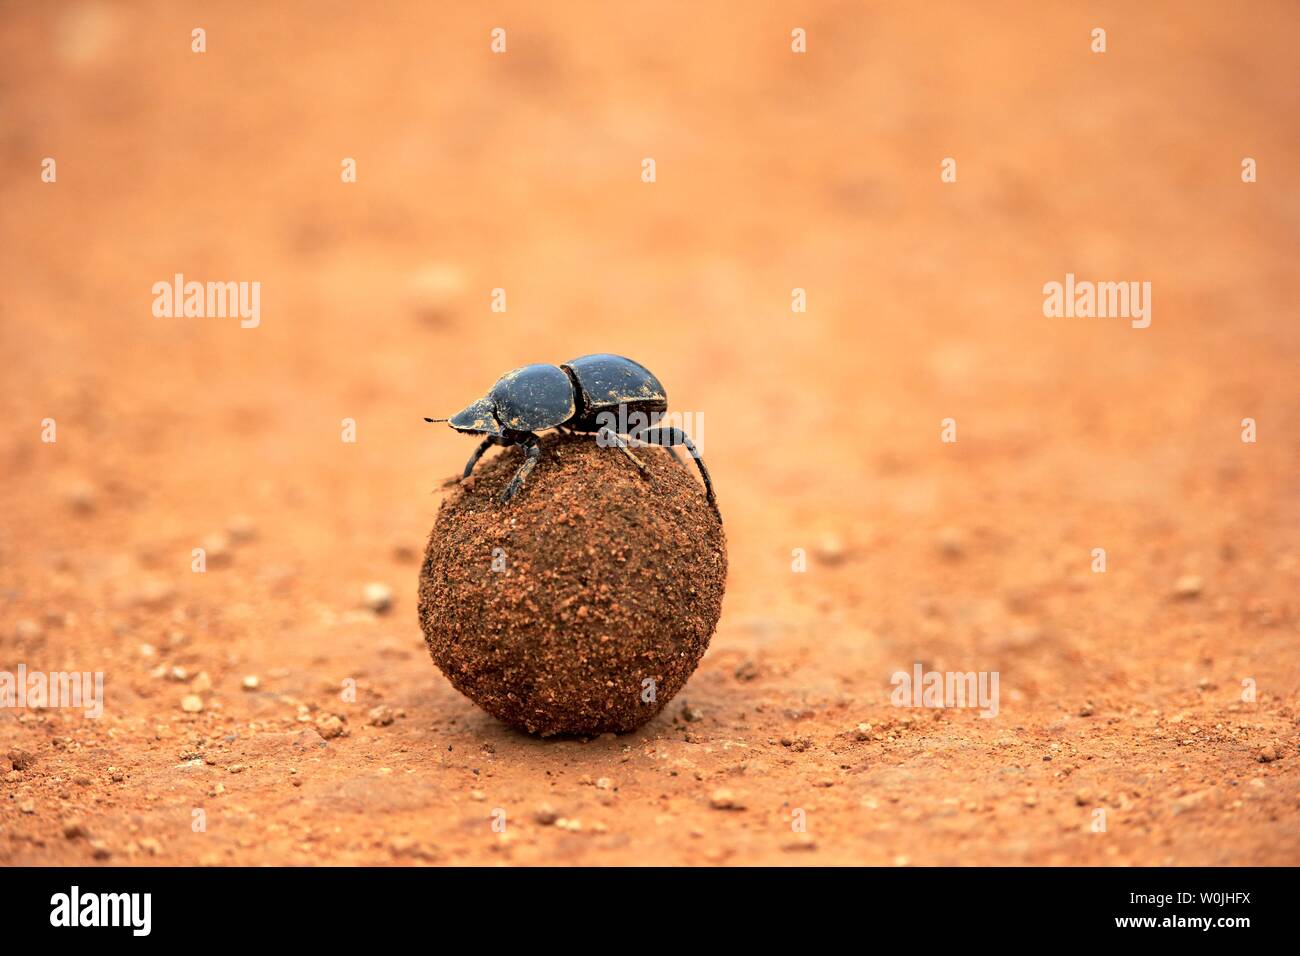 Dung beetle (Scarabaeus sacer) rotoli palla di sterco di elefante, Addo Elephant National Park, Capo orientale, Sud Africa Foto Stock